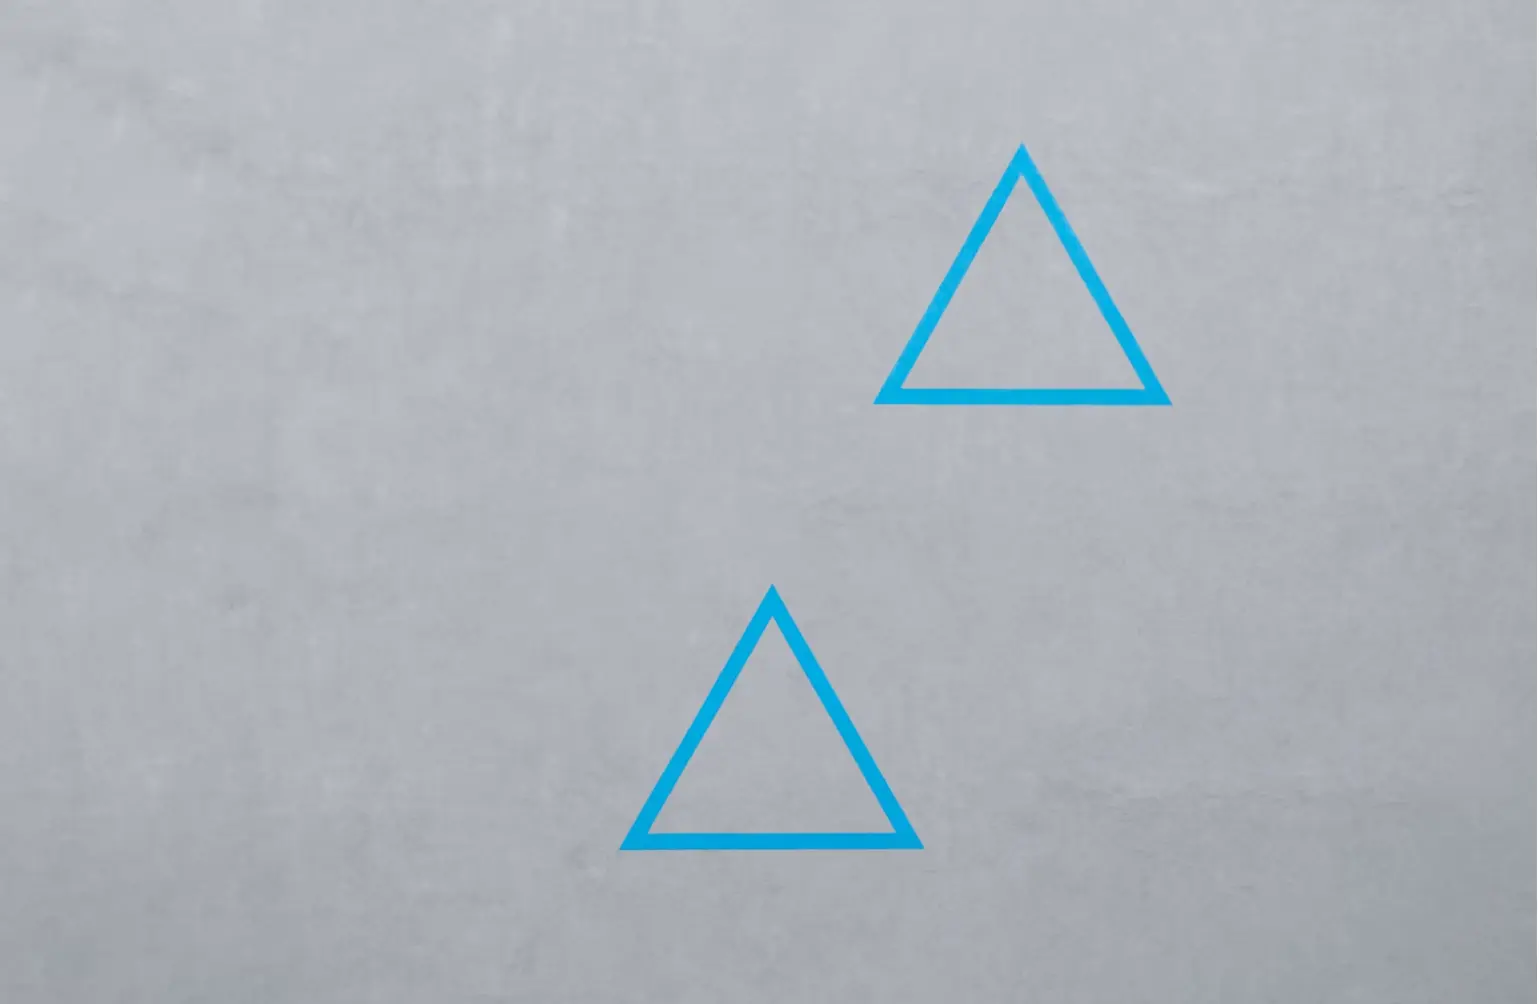 The Rhetorical Triangle